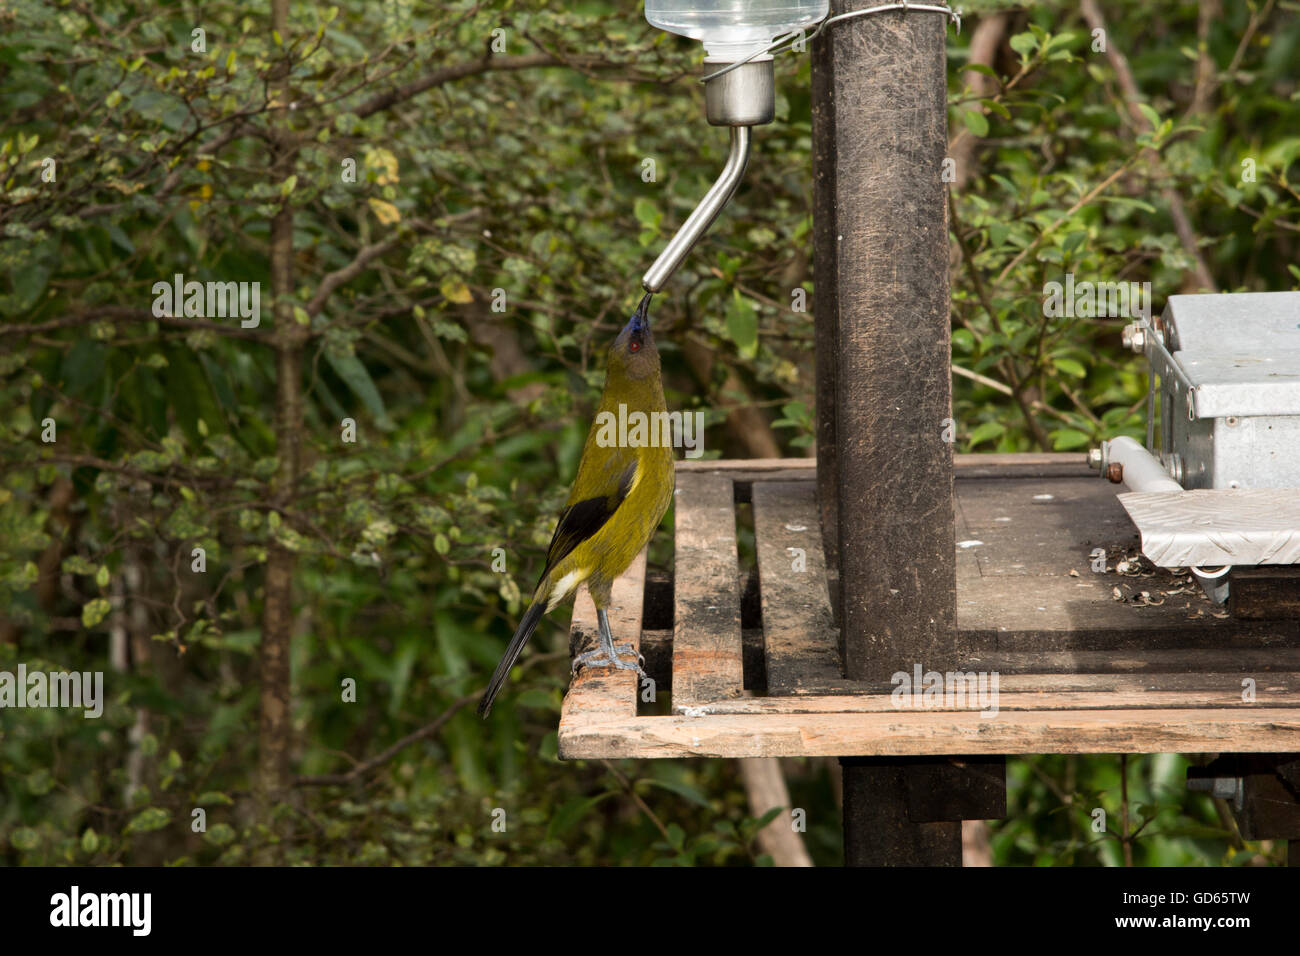 New Zealand Bellbird drinking from a feeder in Orokonui Ecosanctuary near Dunedin on the South Island. Stock Photo